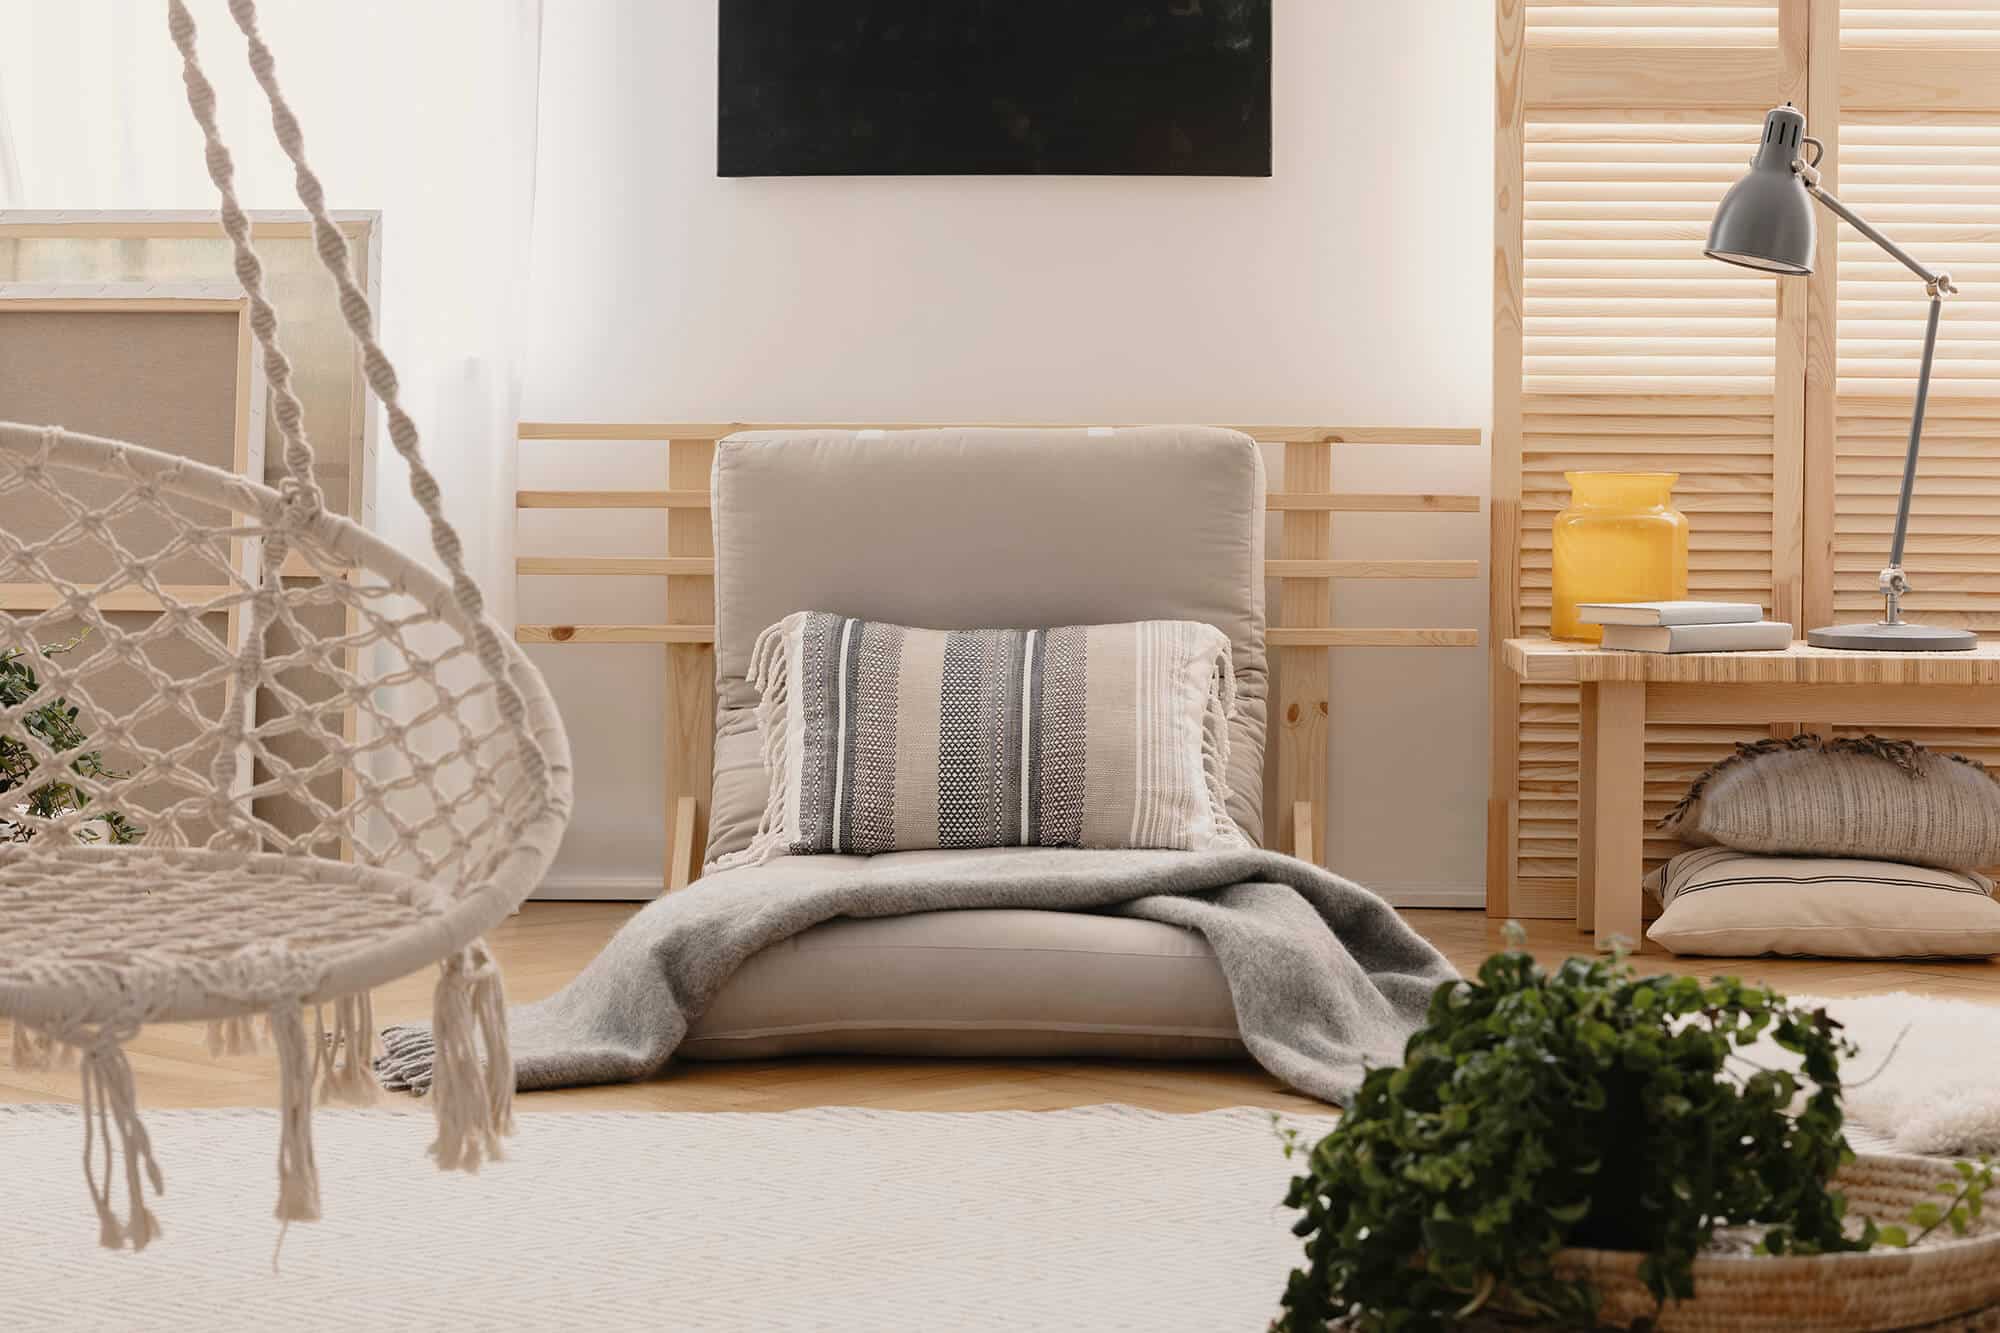 pillow-and-blanket-on-grey-futon-in-boho-bedroom-i-2021-08-26-15-45-34-utc-1.jpg